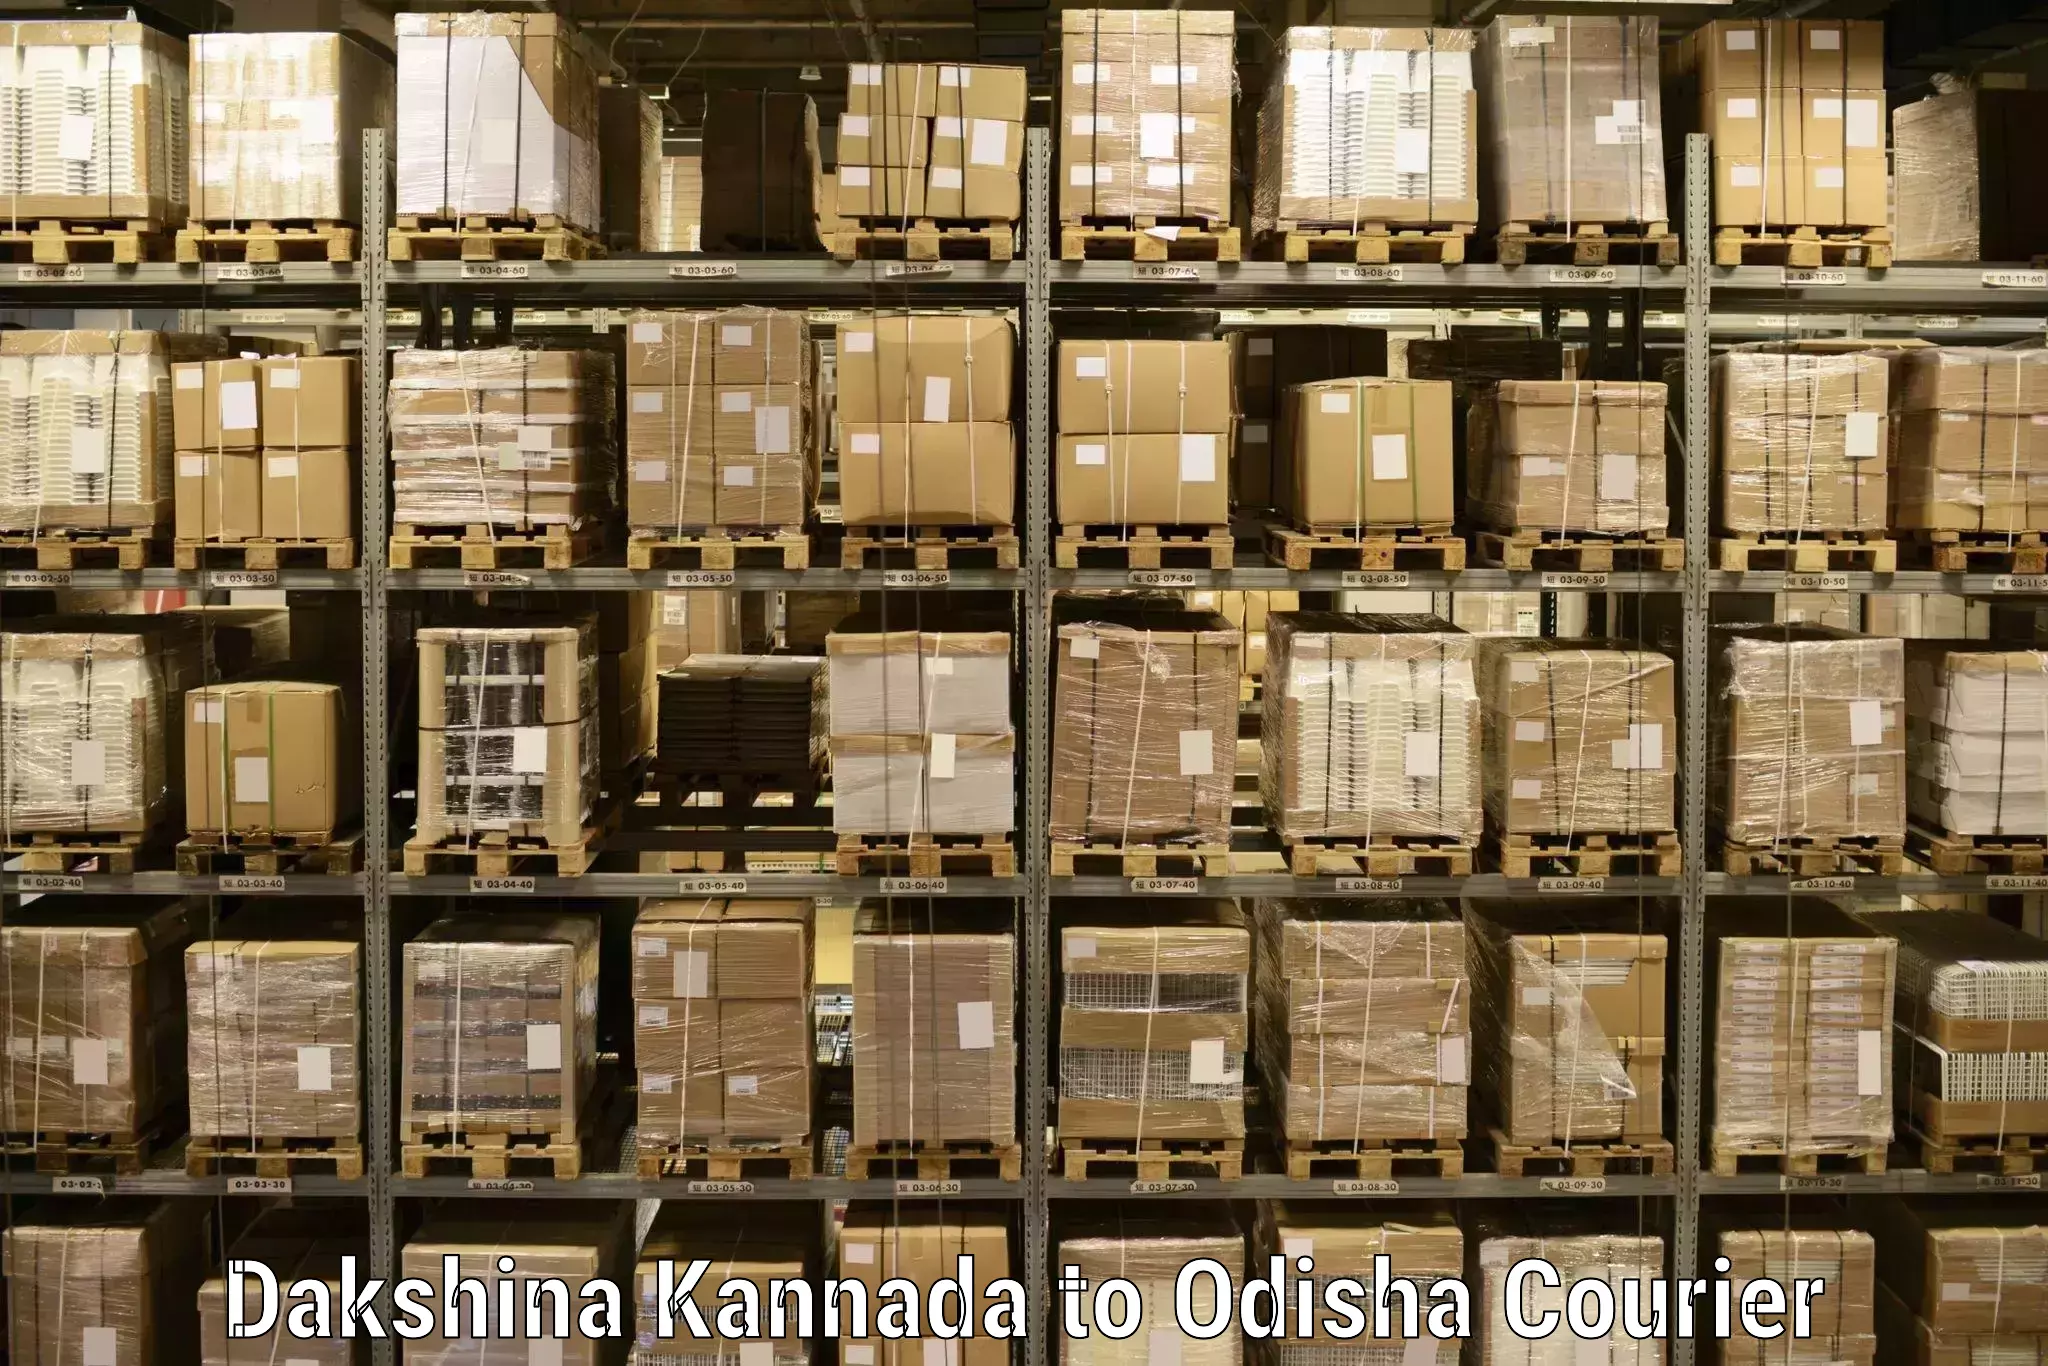 Courier service partnerships Dakshina Kannada to Telkoi